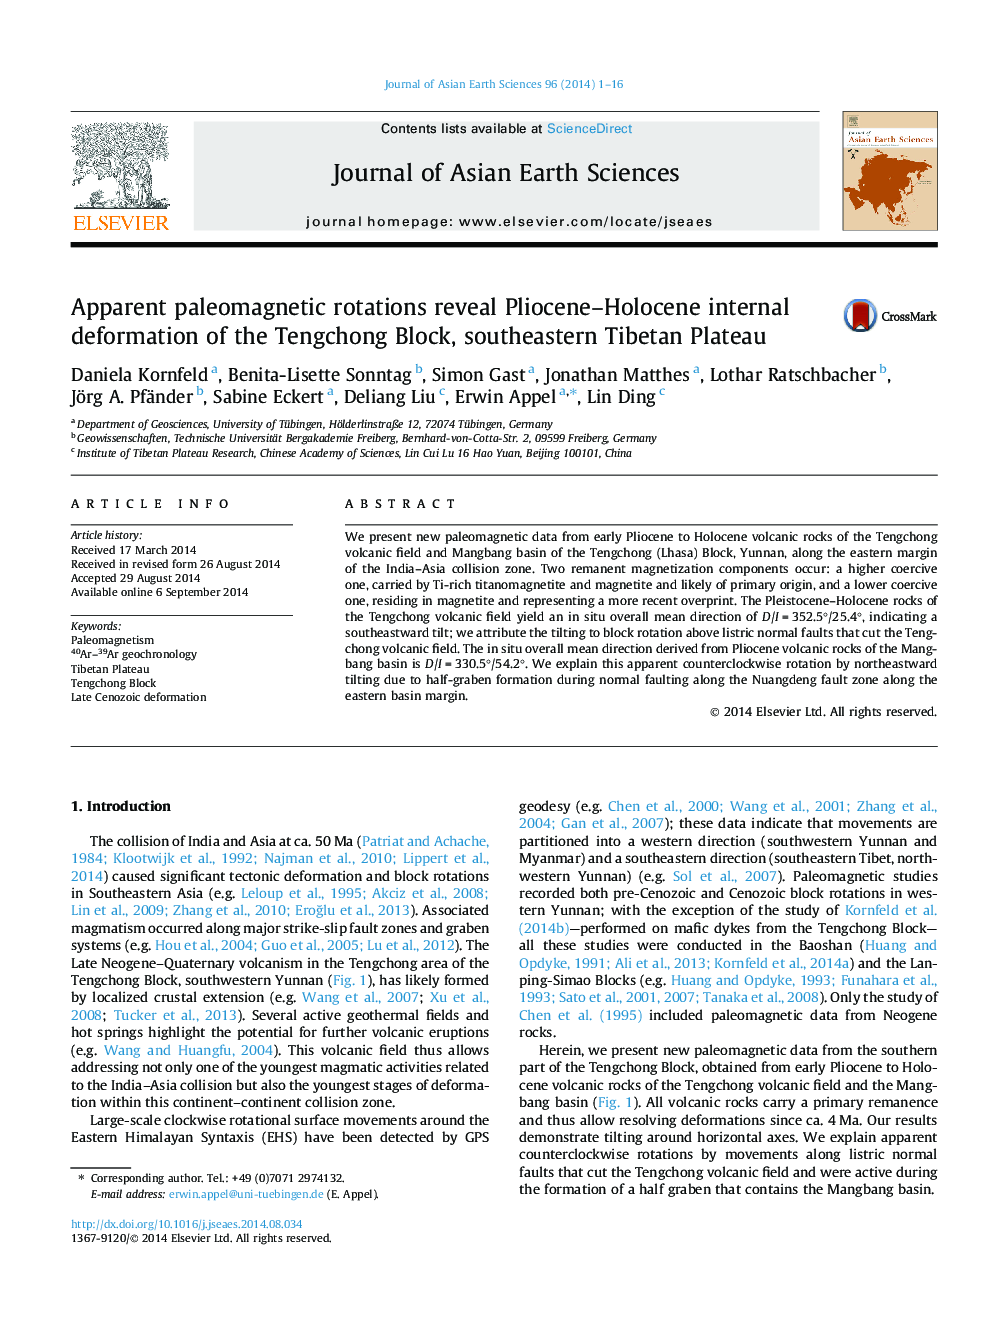 Apparent paleomagnetic rotations reveal Pliocene-Holocene internal deformation of the Tengchong Block, southeastern Tibetan Plateau